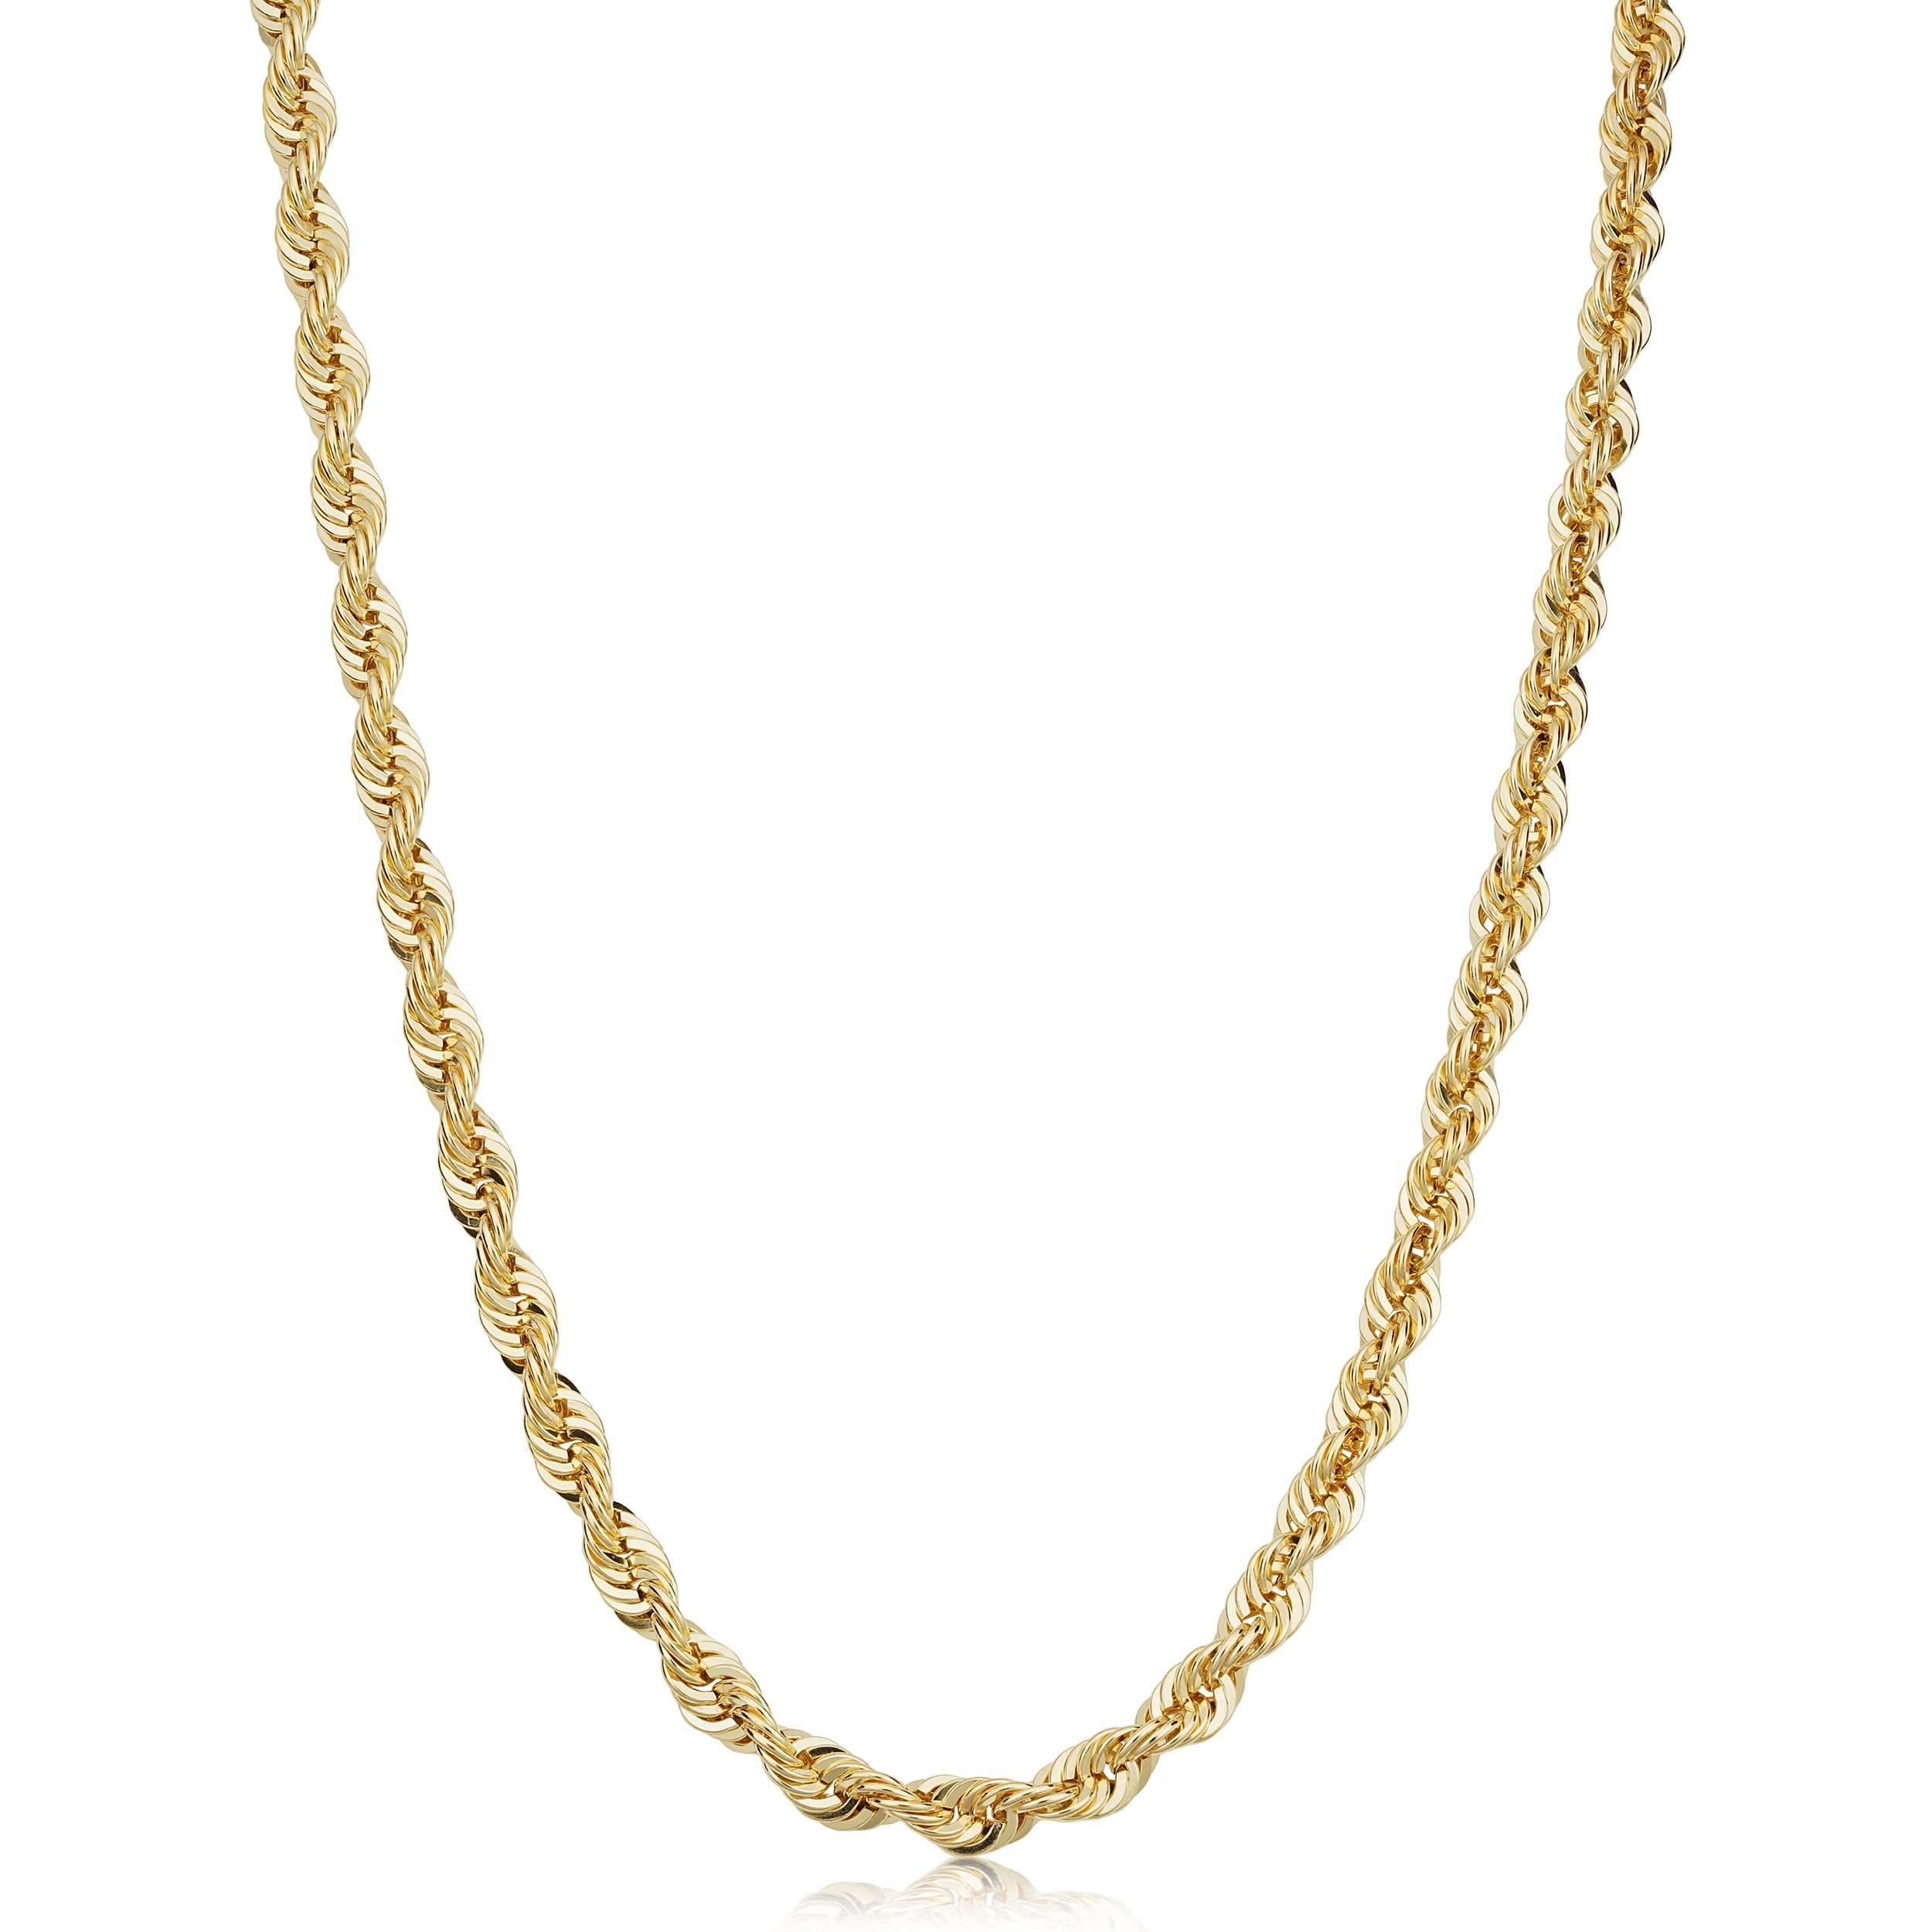 Buy Kooljewelry en's or Women's 14k Yellow Gold Solid MRope Chain